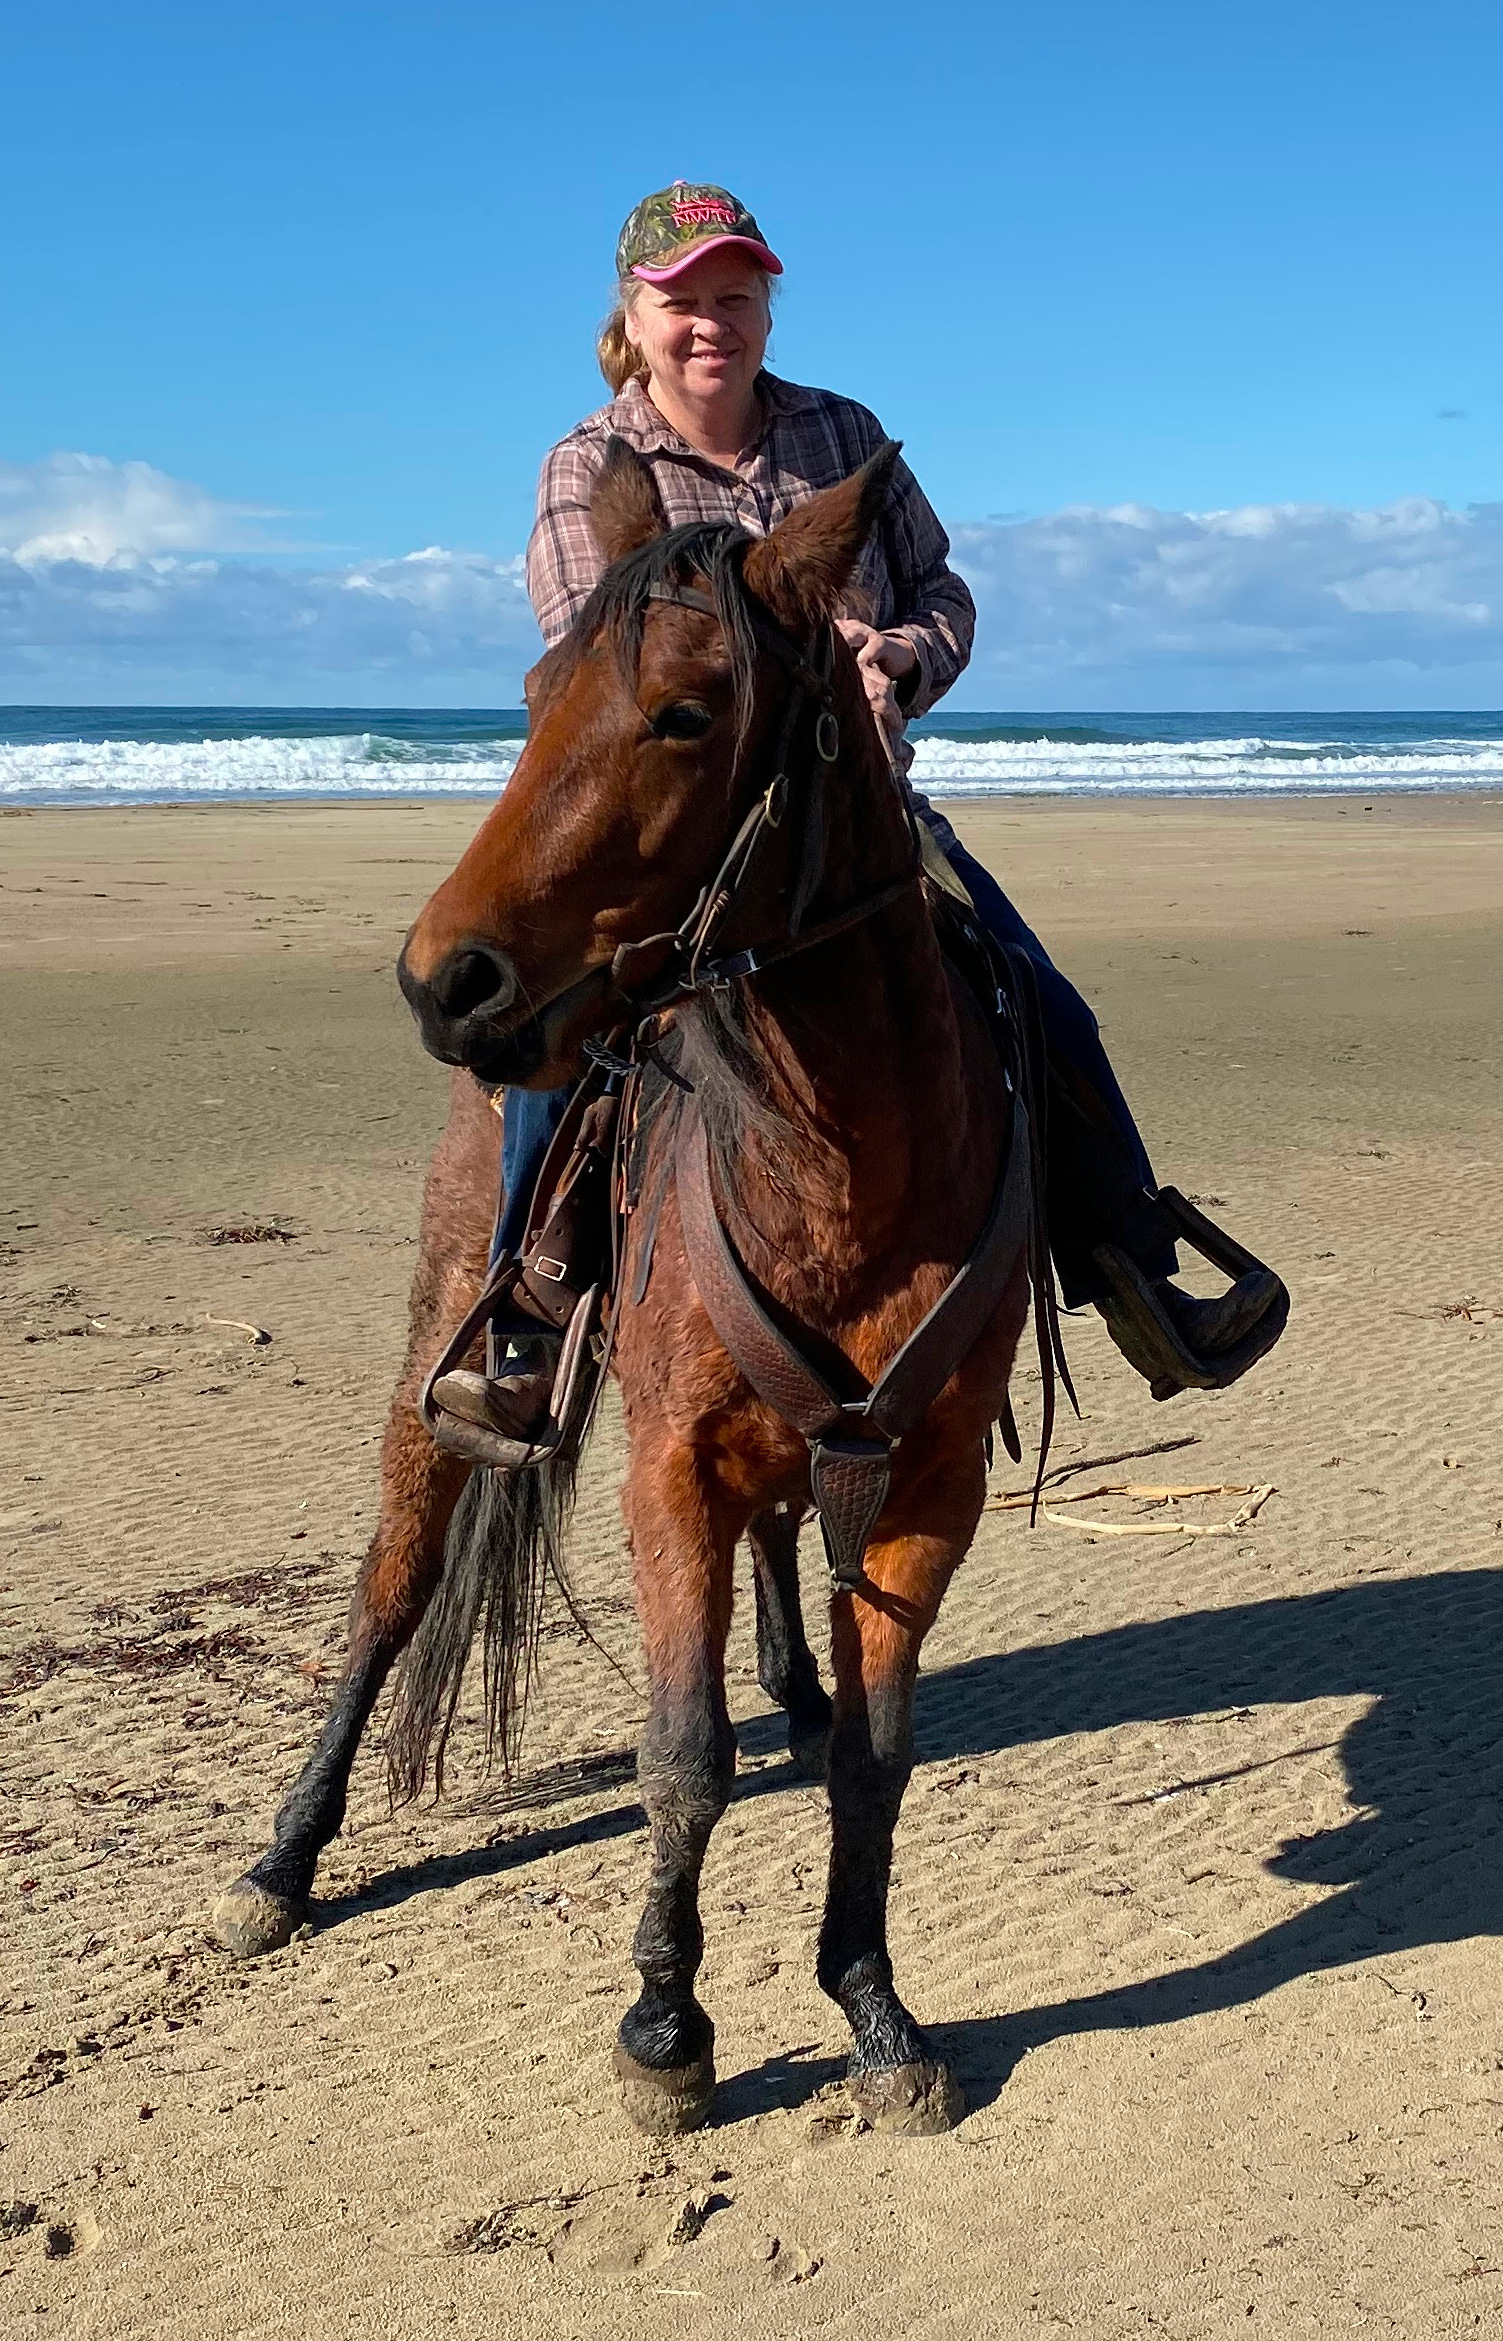 mom-shelsie-horse-beach-02.jpg